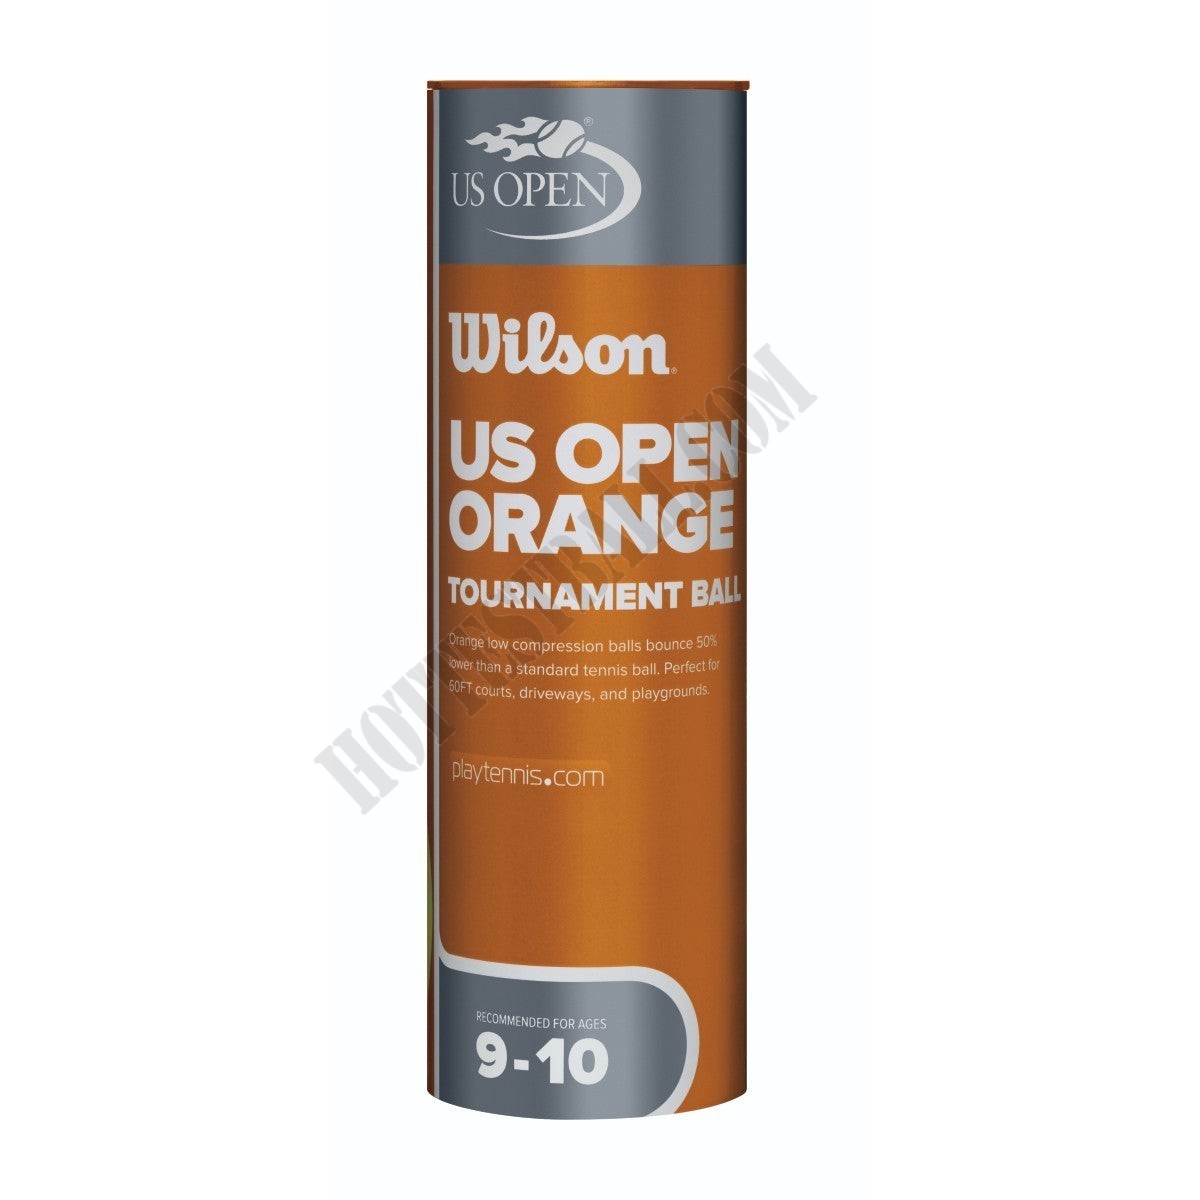 US Open Orange Tournament Transition Tennis Balls - 24 Cans (72 Balls) - Wilson Discount Store - -1